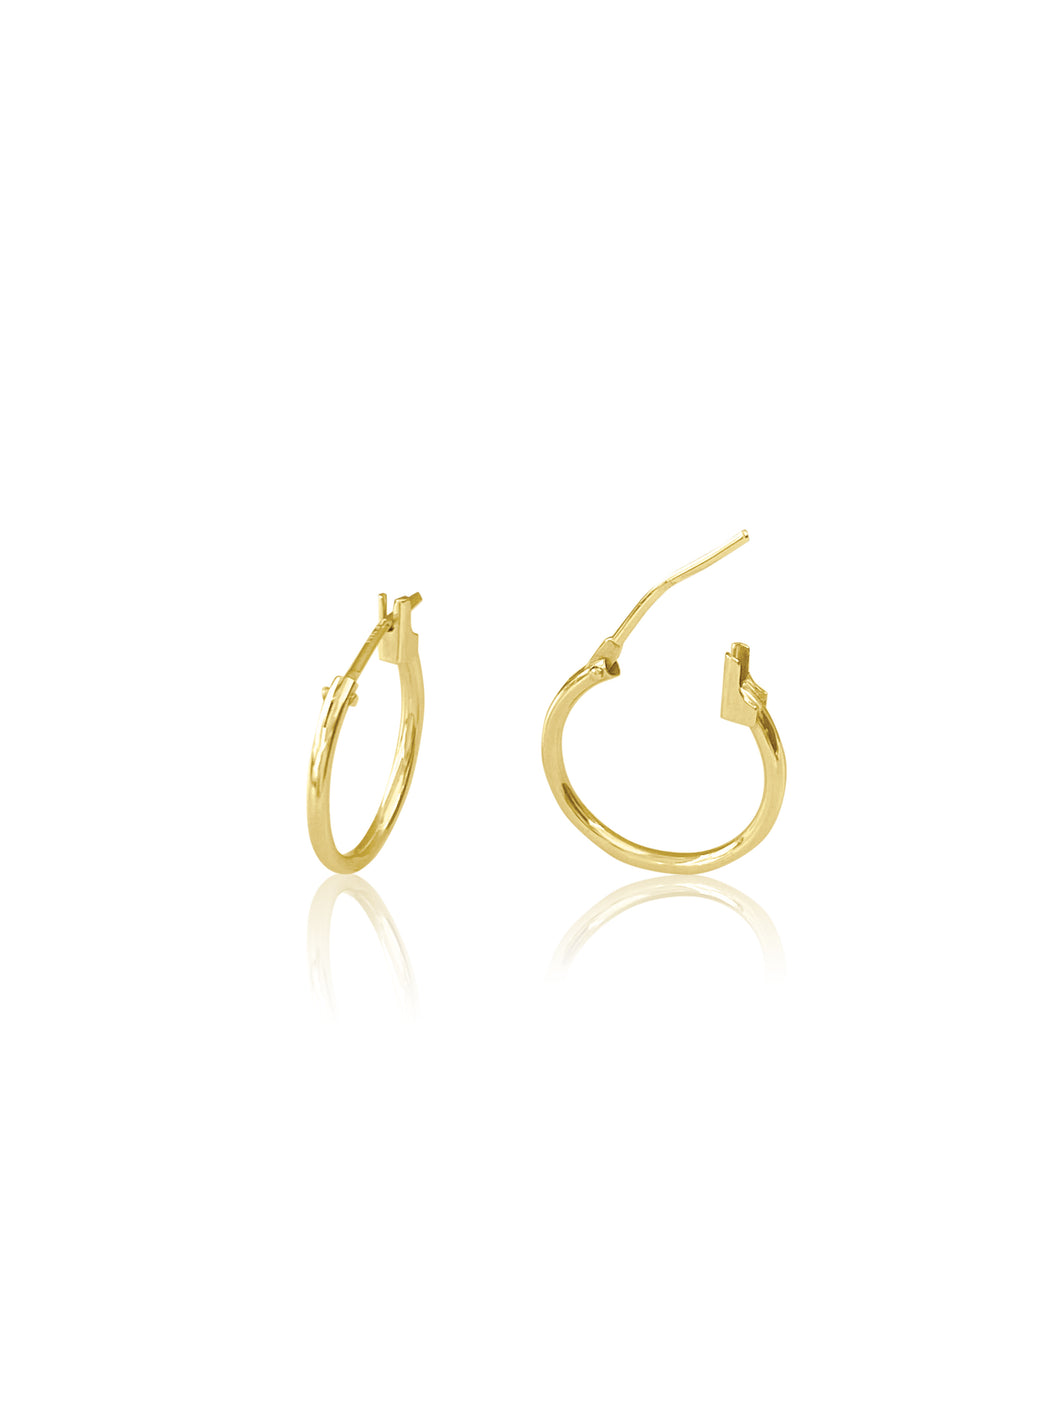 14KT Gold Hoop Earrings